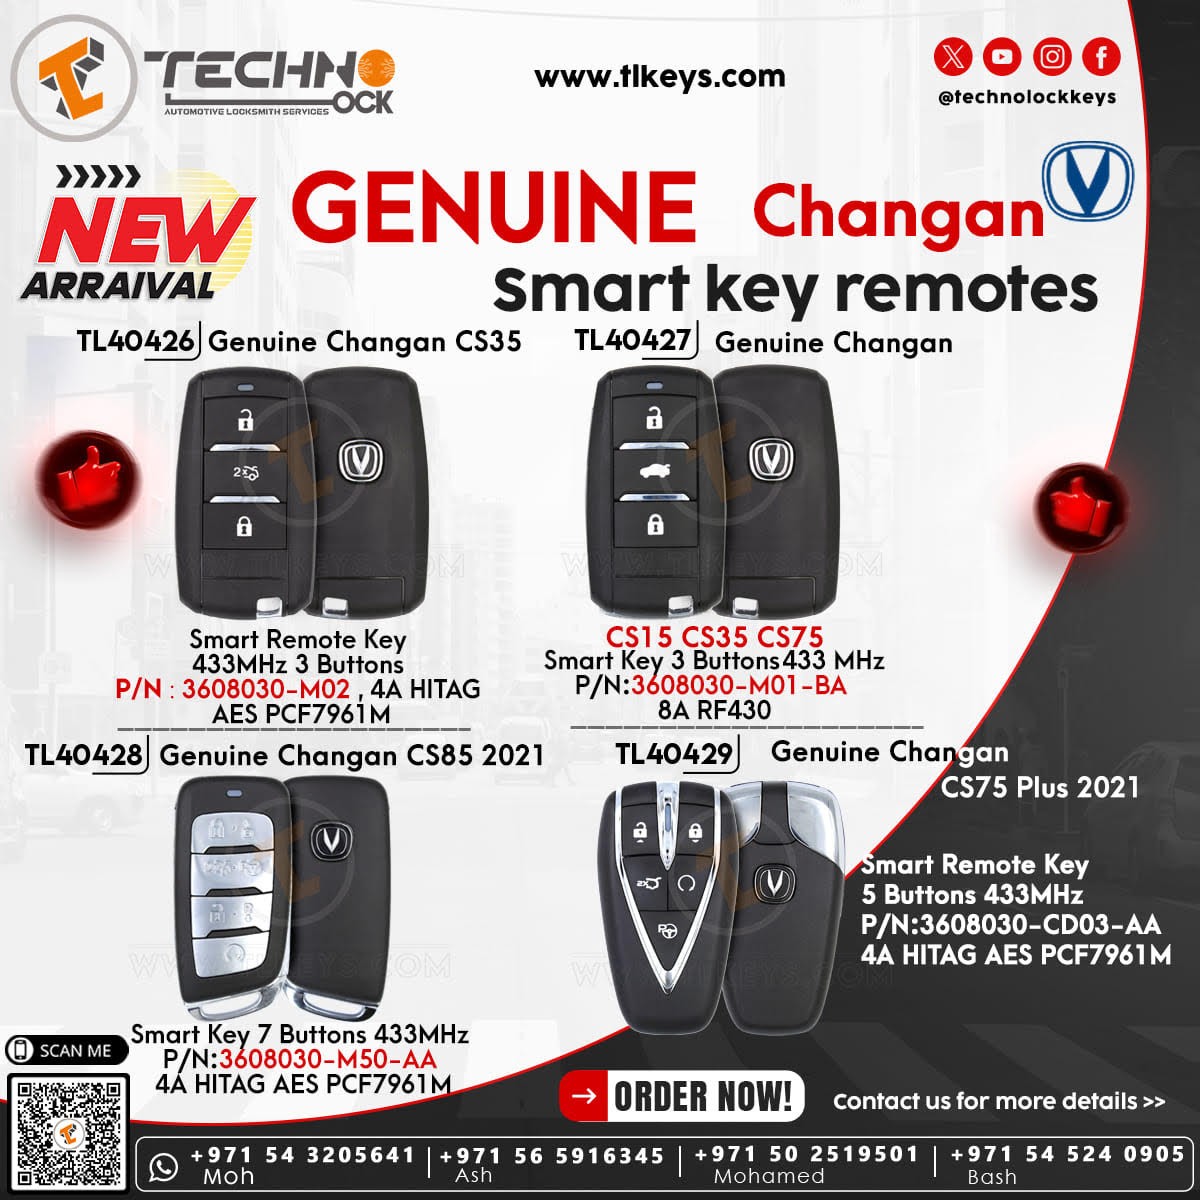 New Genuine Changan Arrival: Smart Key Remote